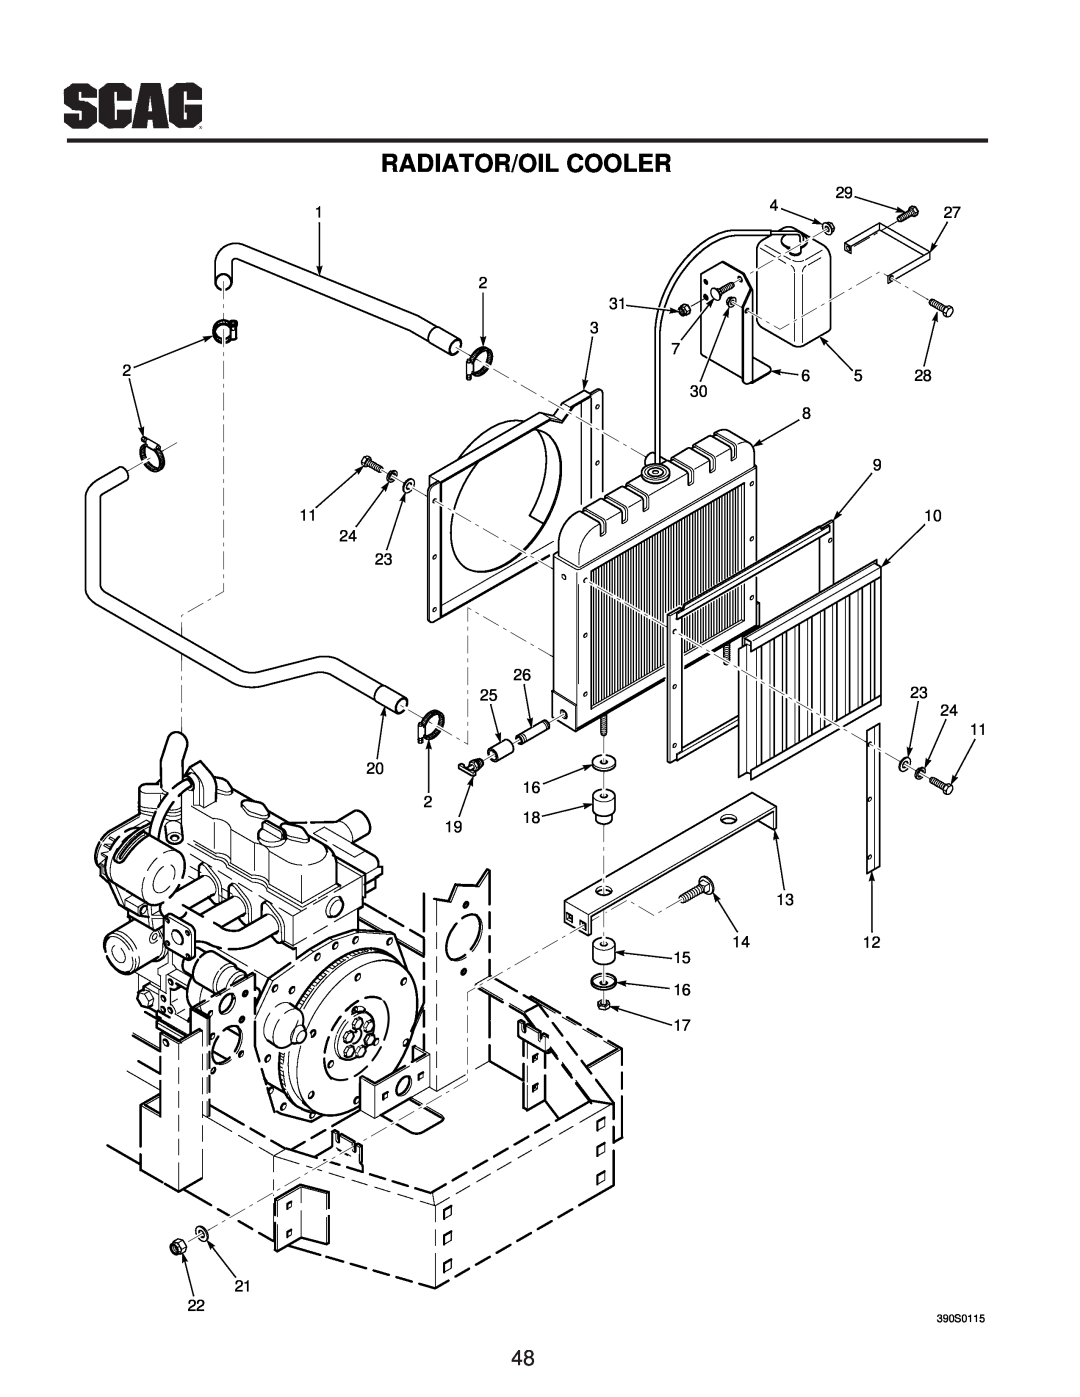 Scag Power Equipment MAG manual Radiator/Oil Cooler, 390S0115 